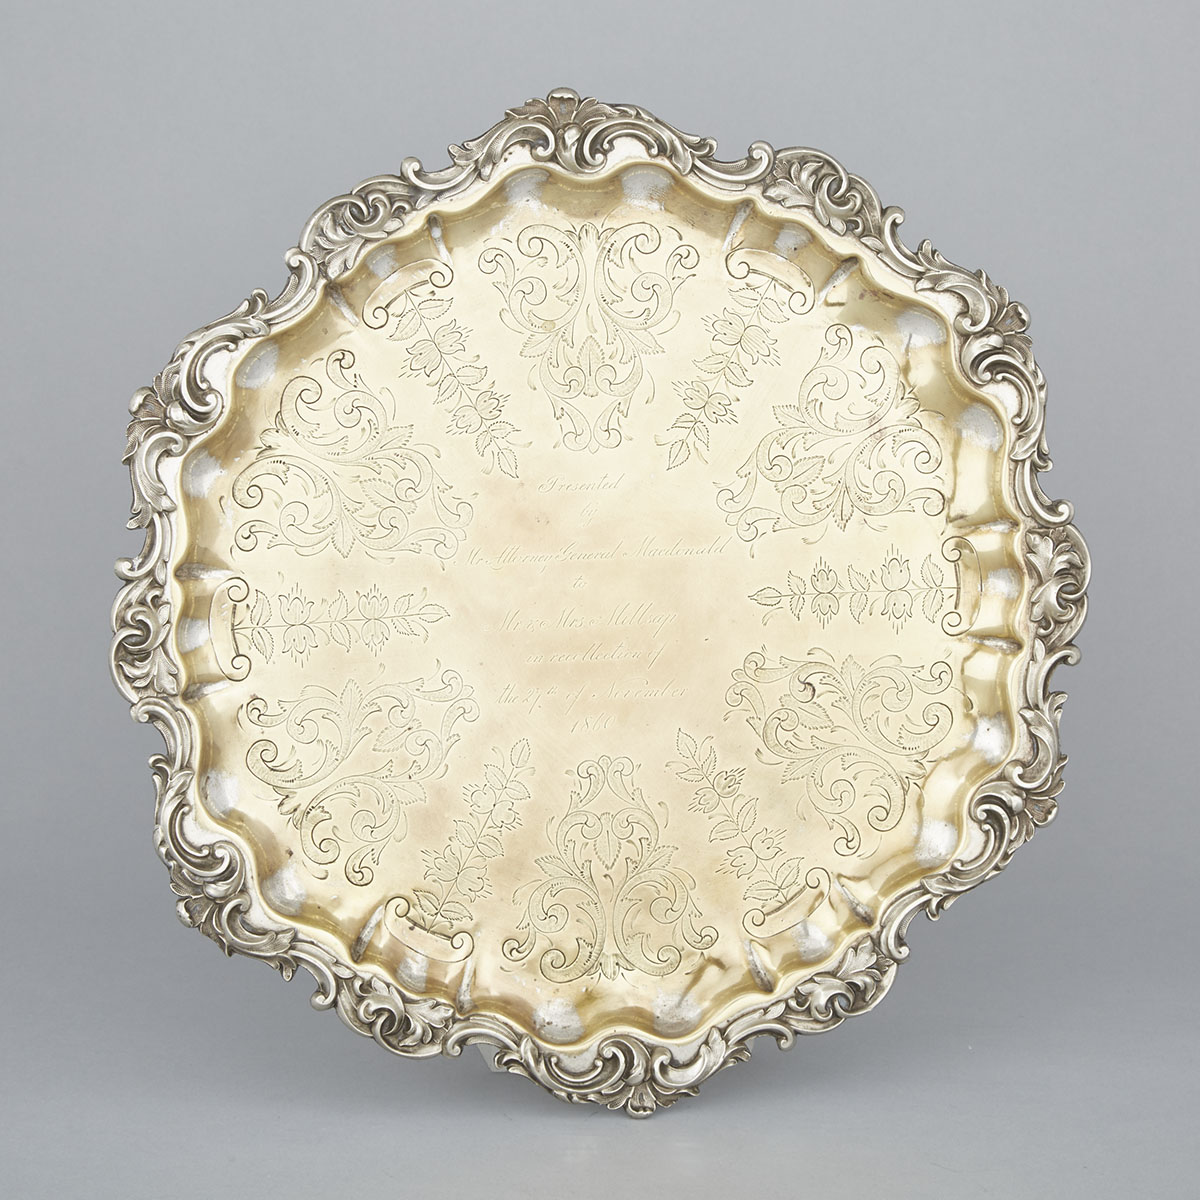 John A. Macdonald Silver Plate Presentation Tray, 1860